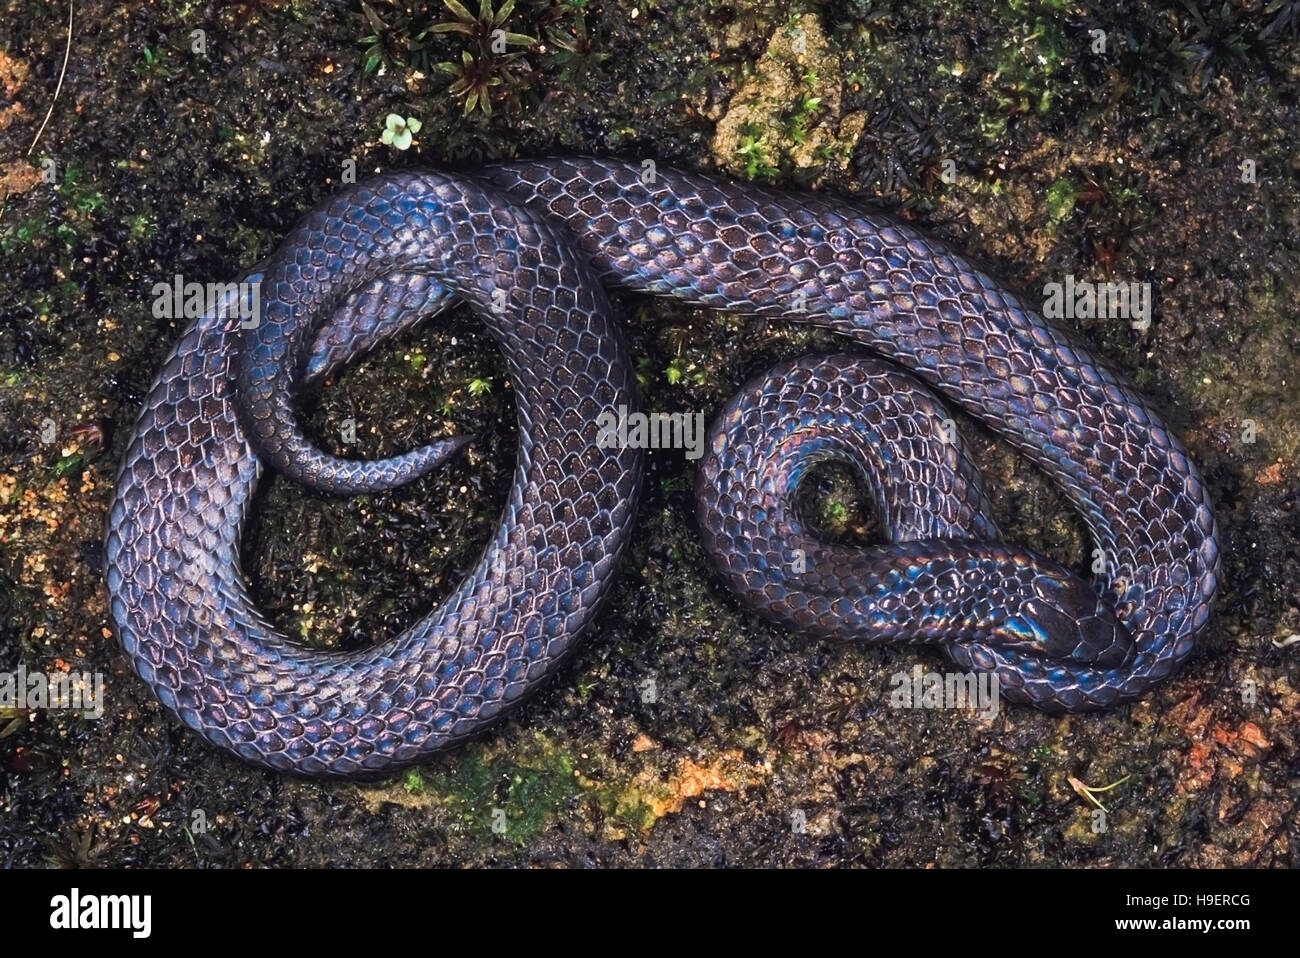 Blythia Reticulata. Iridescent snake. Non venomous. Rarely available. One of the few images of this snake. Arunachal Pradesh, India. Stock Photo